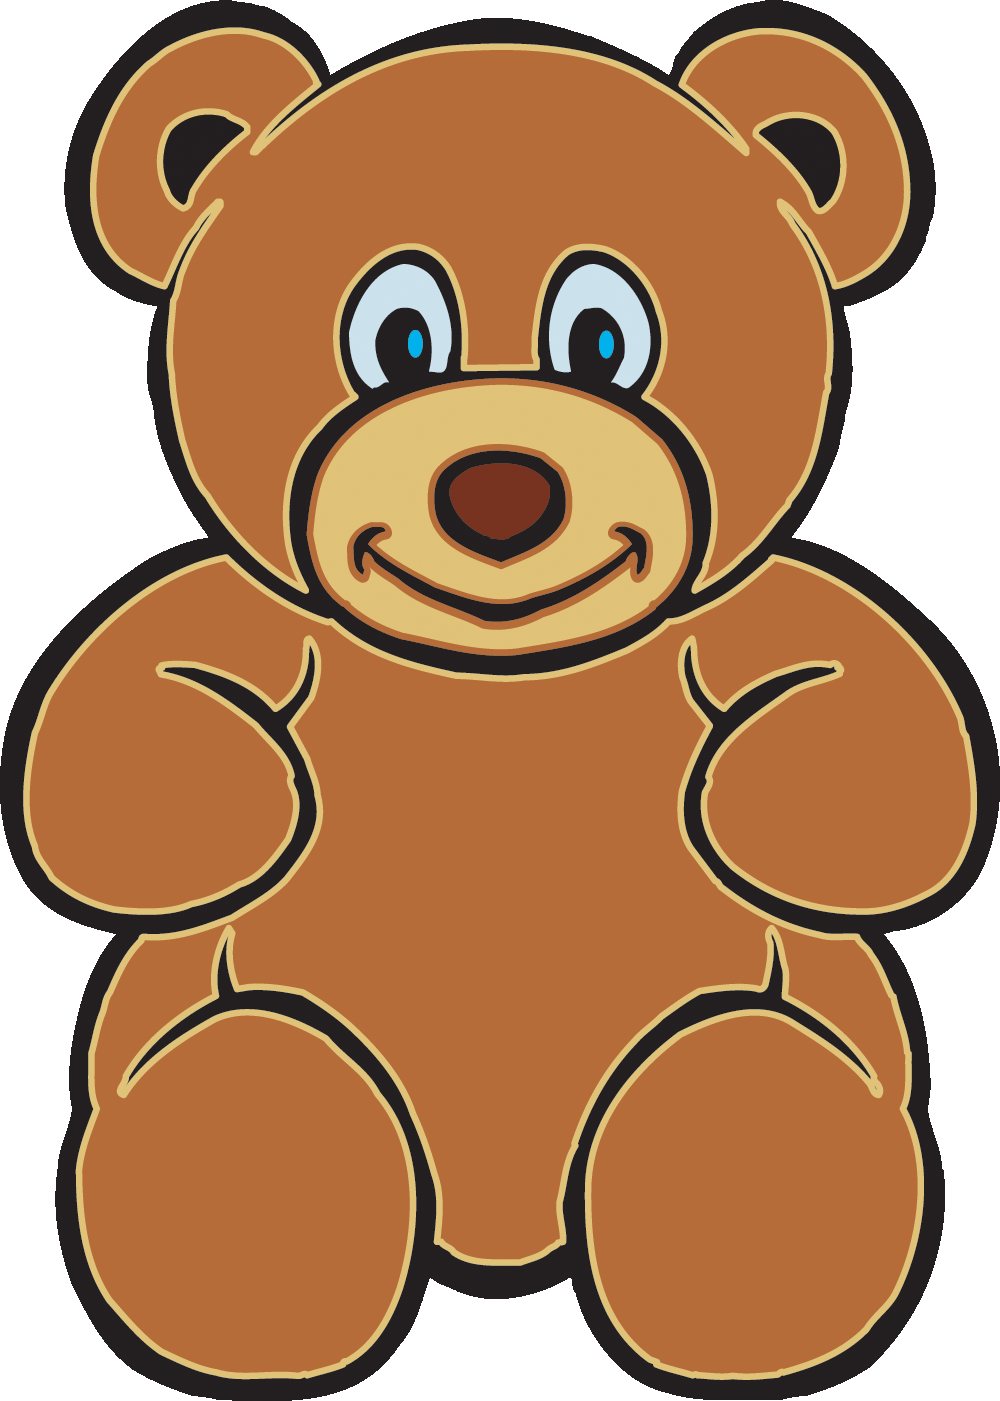 Brown Bear clipart #16, Download drawings